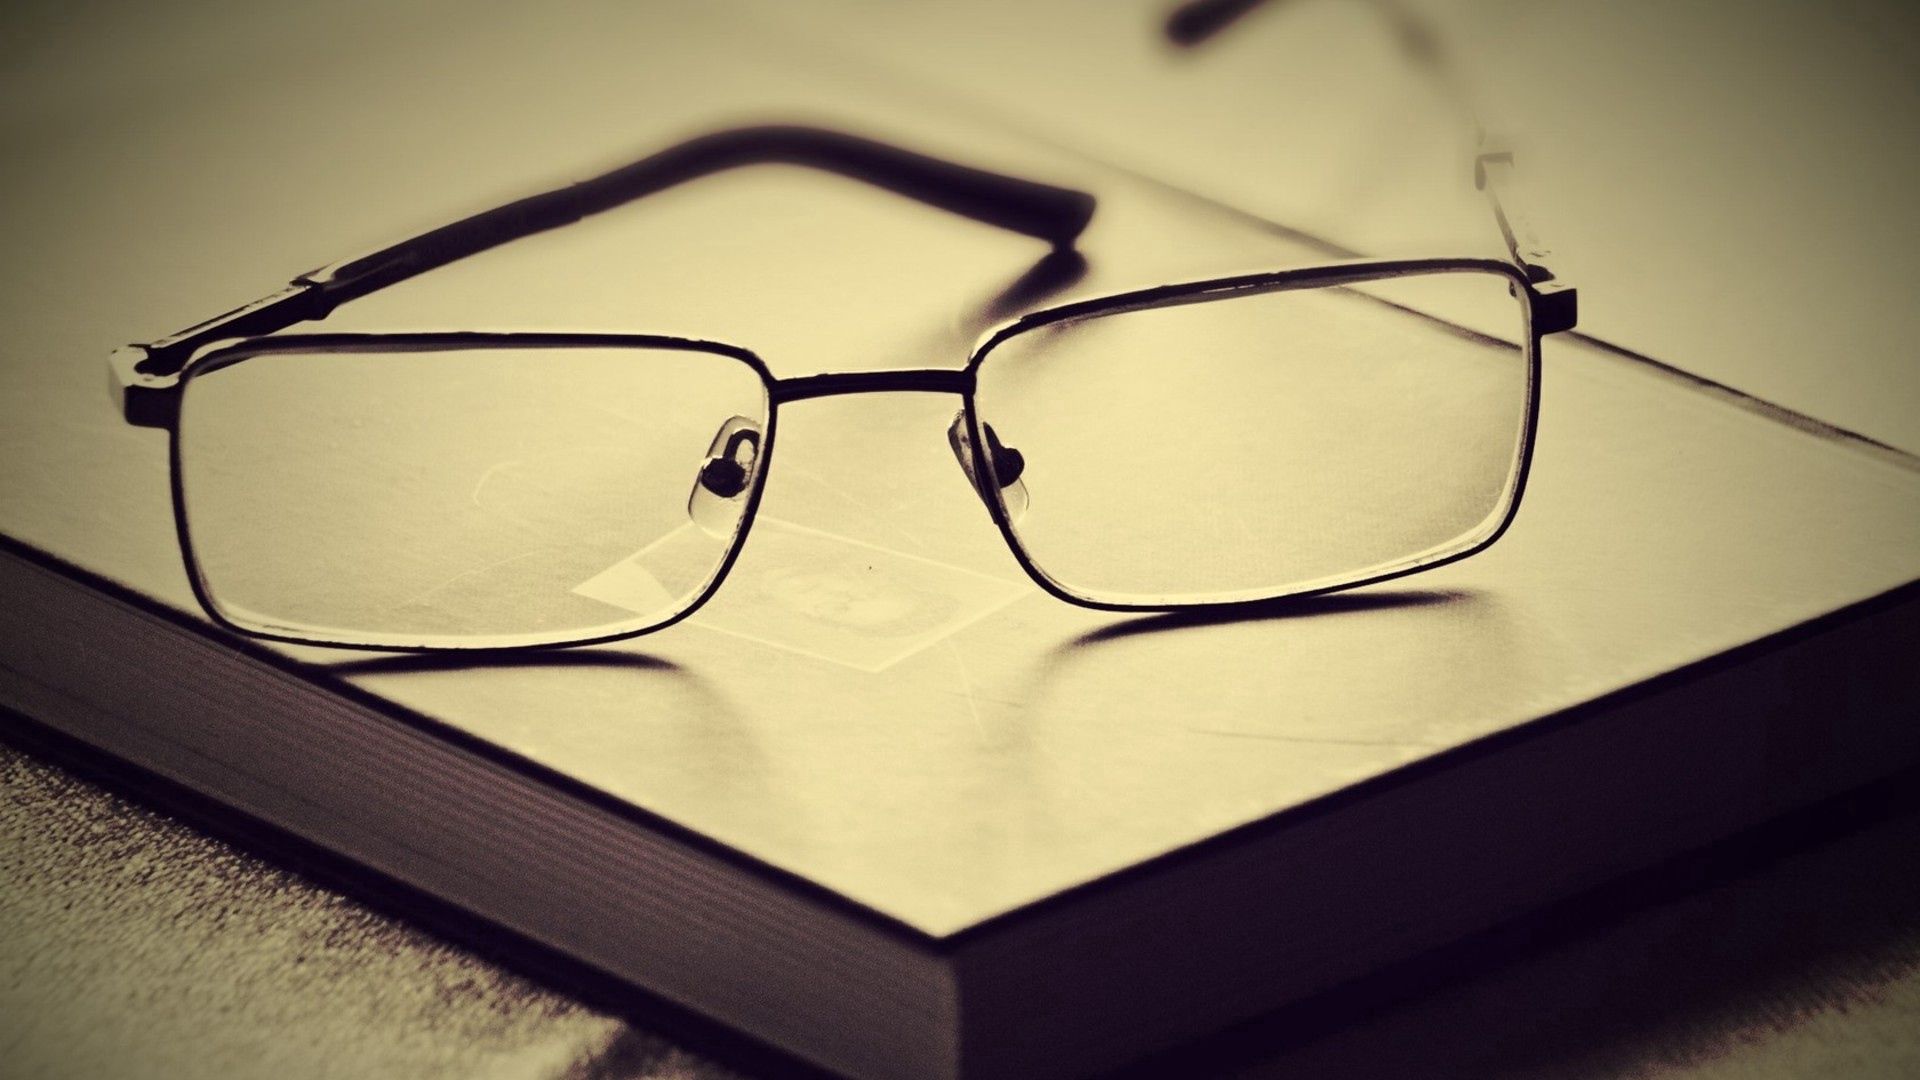 miscellanea, miscellaneous, book, lenses, glasses, spectacles, frame, setting